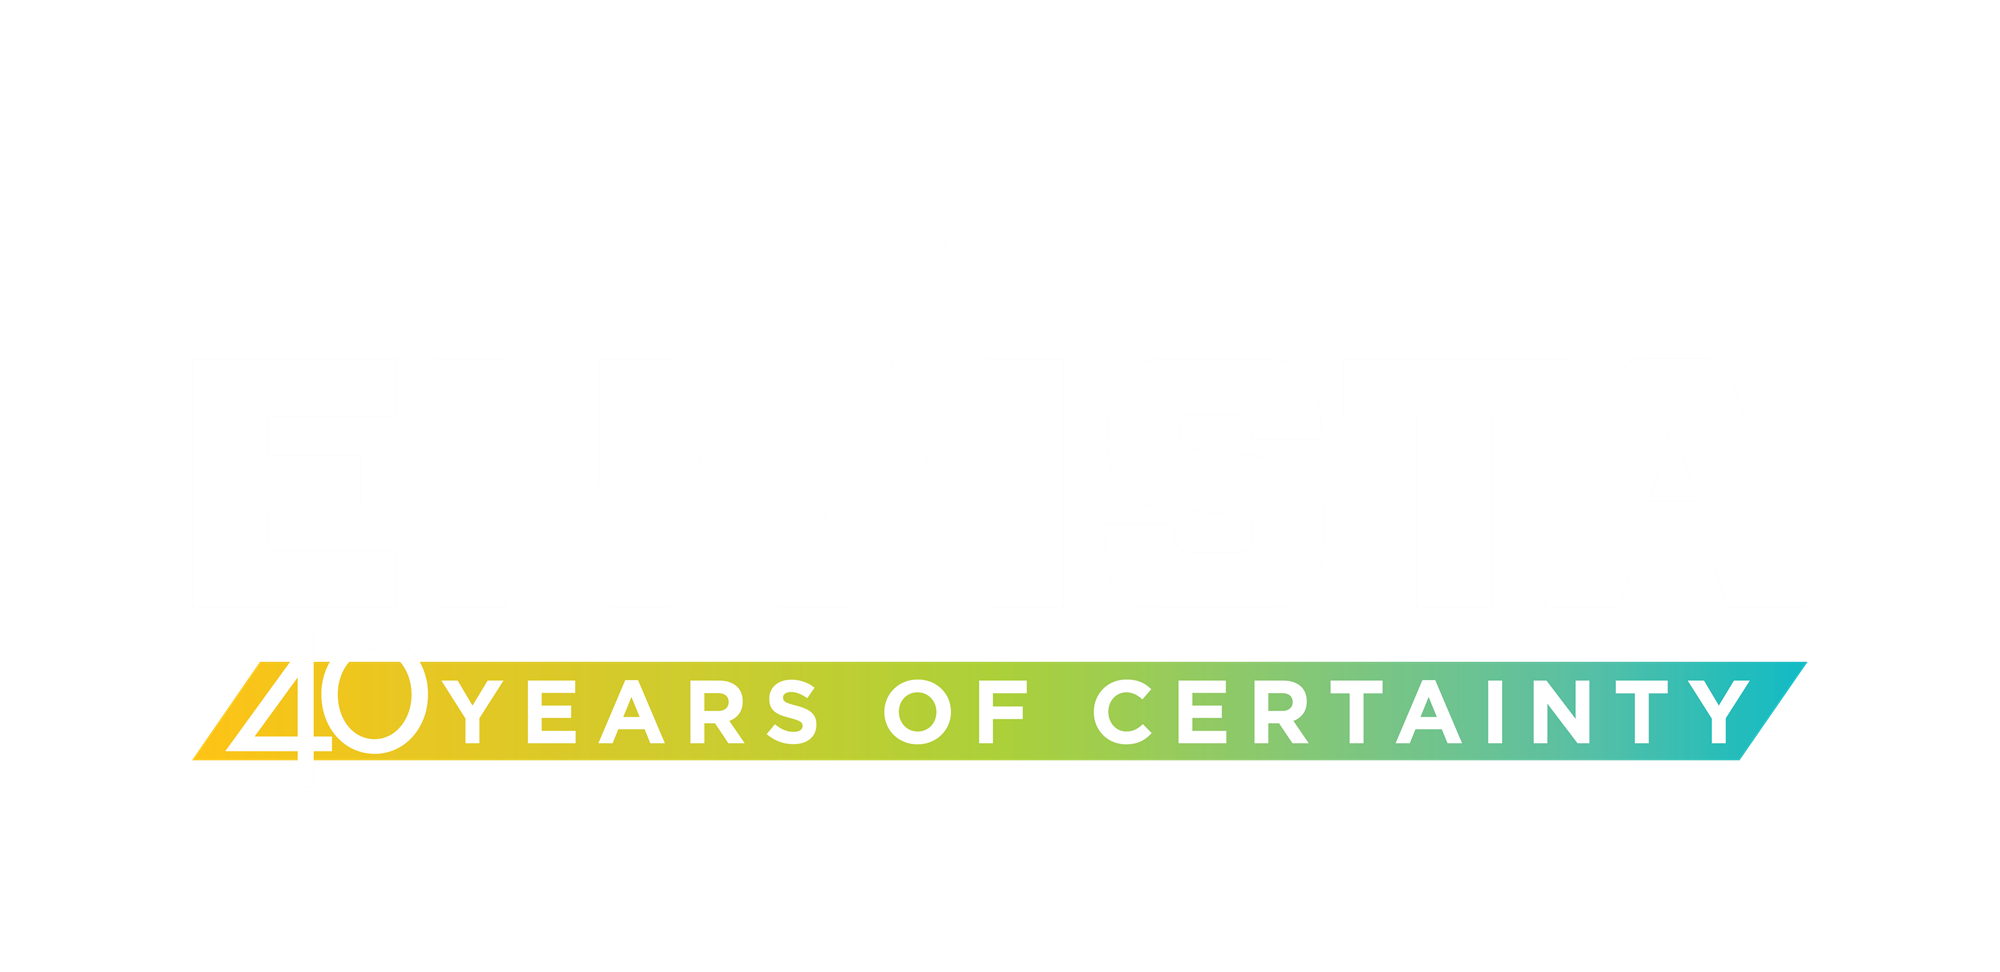 envista 40 year anniversary logo white high res 03